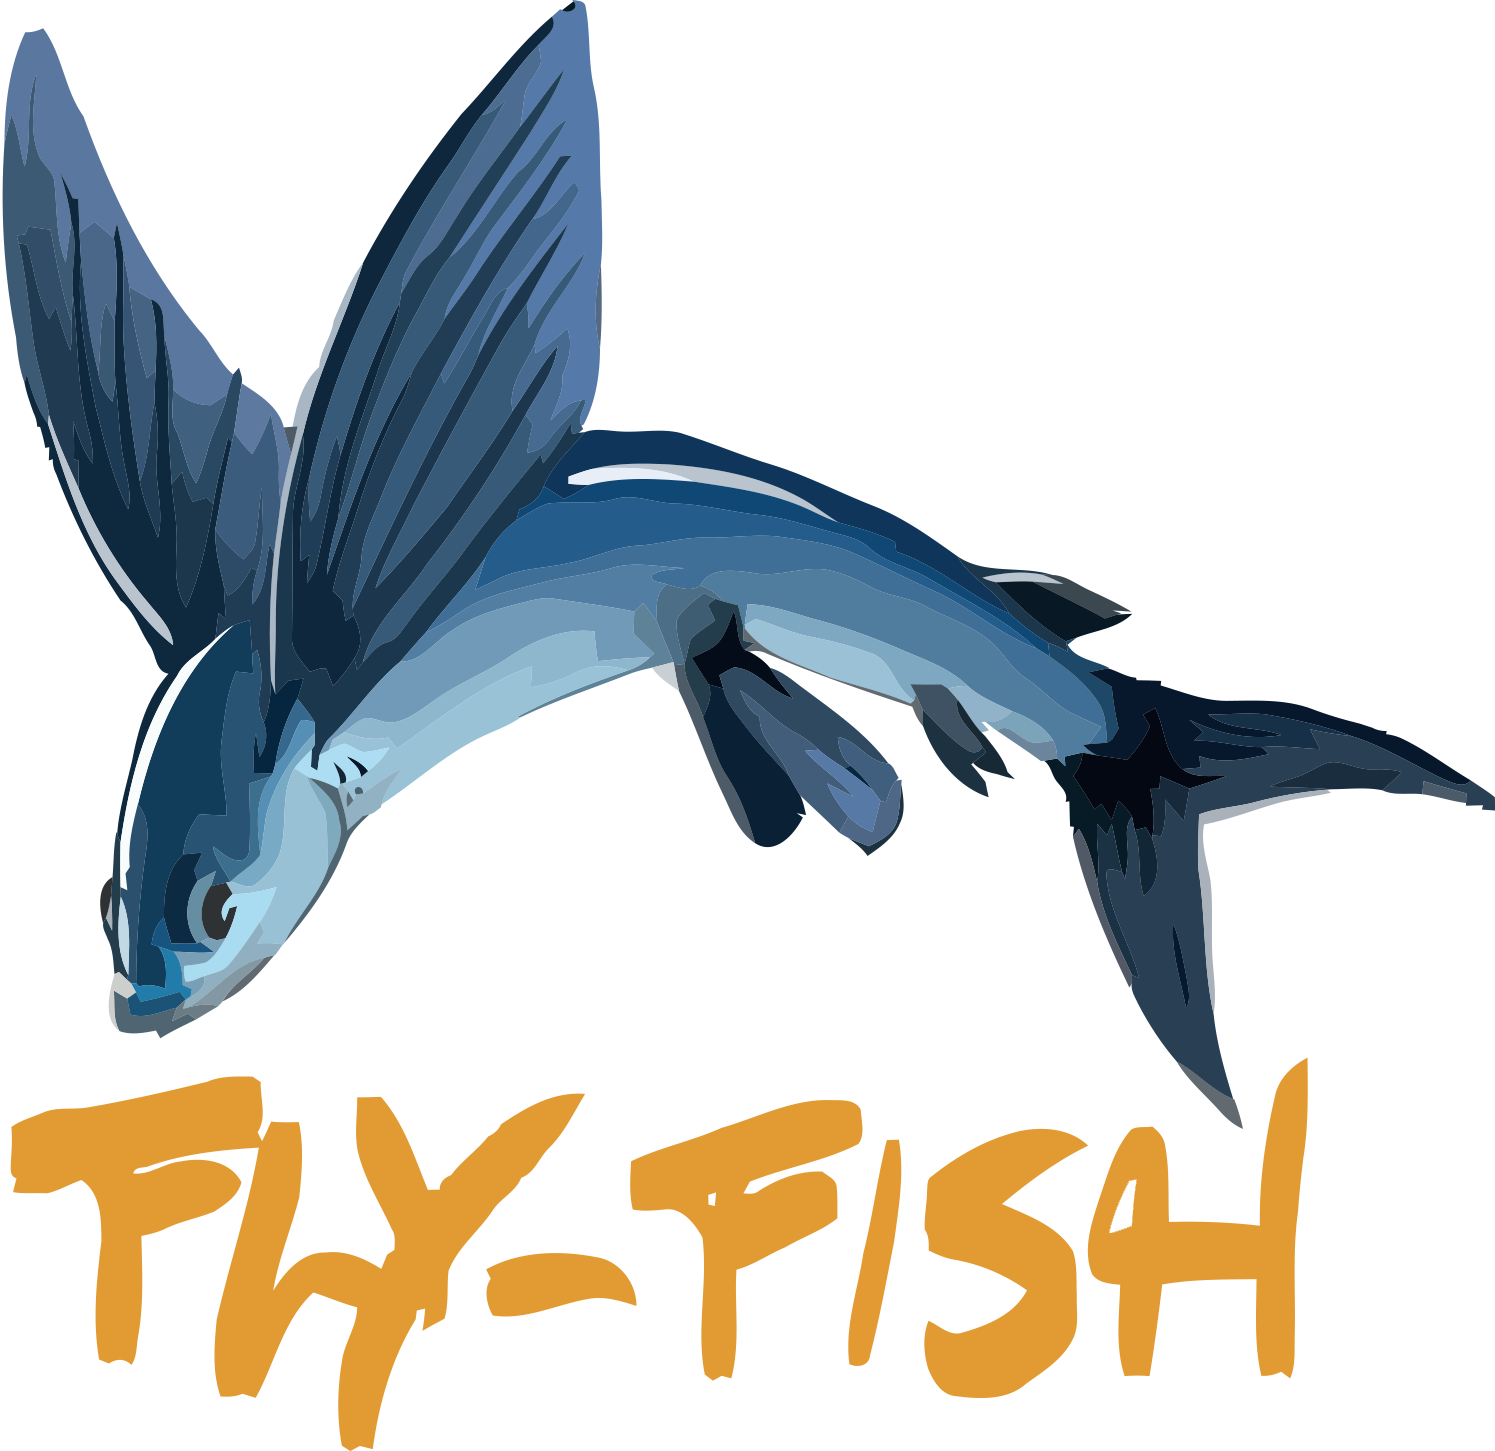 Fly-fishsportswear - Com - Fly Fishing (1495x1451)